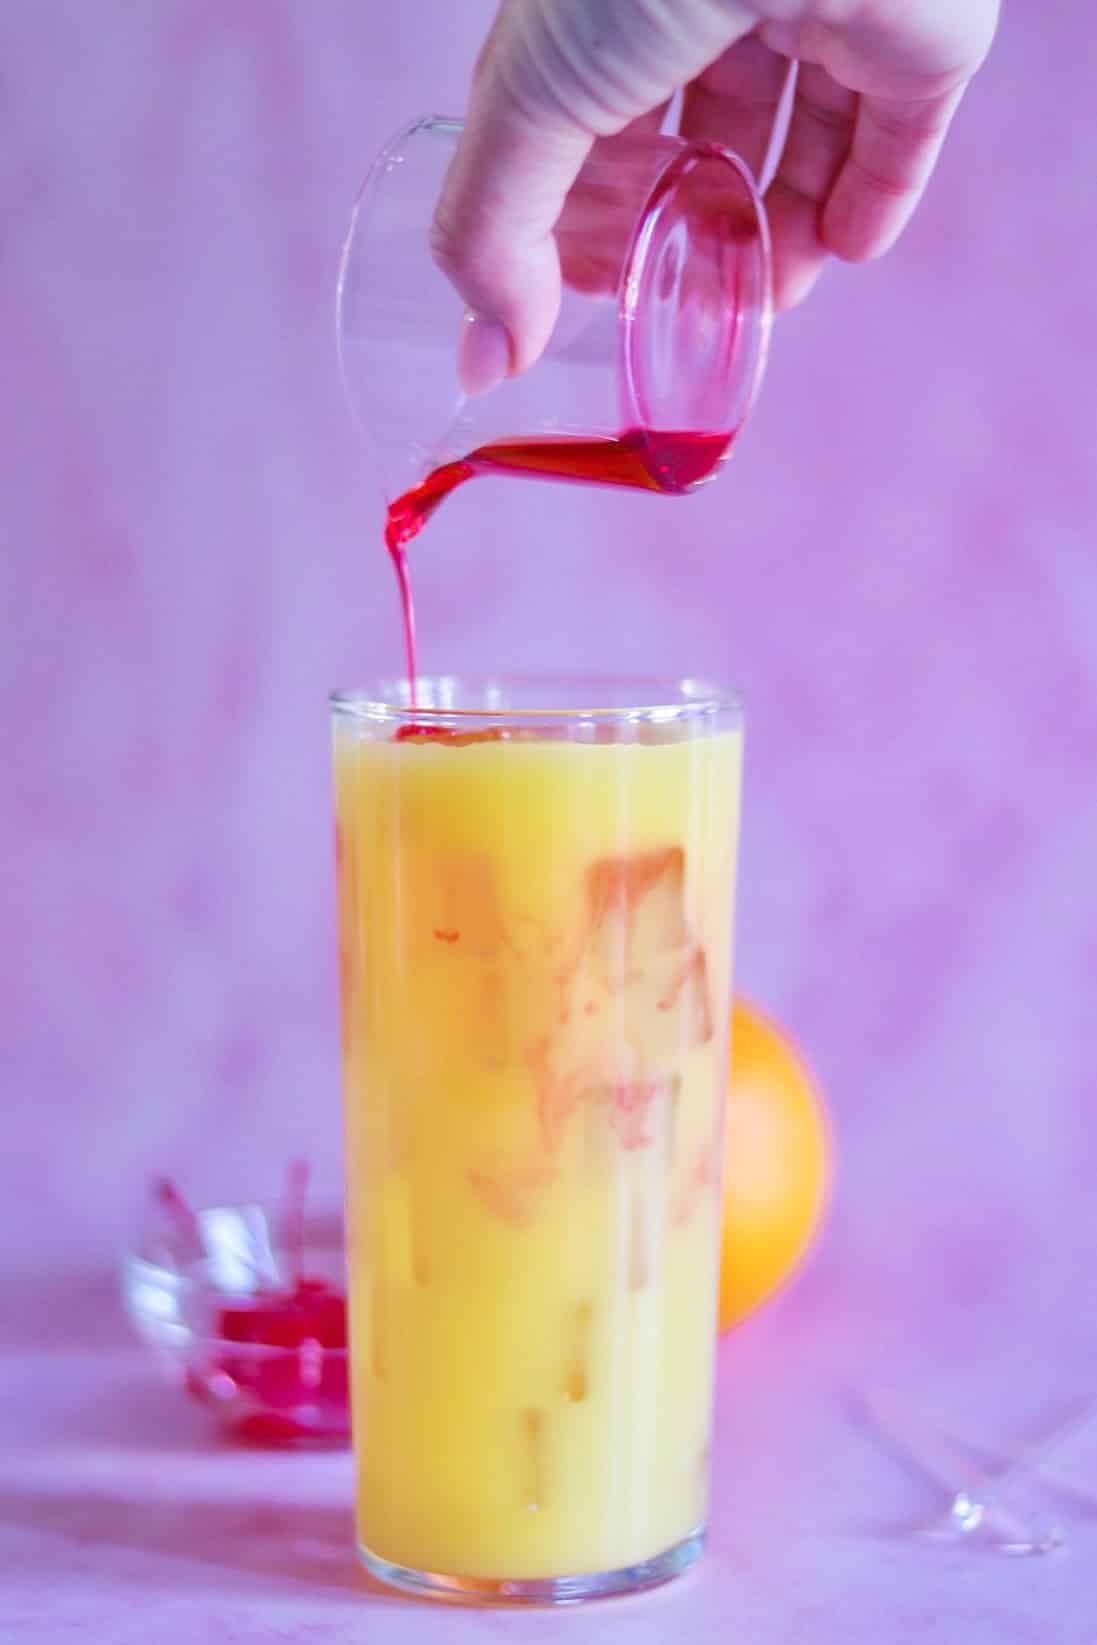 mocktail recipes with orange juice: how to make an orange sunrise mocktail